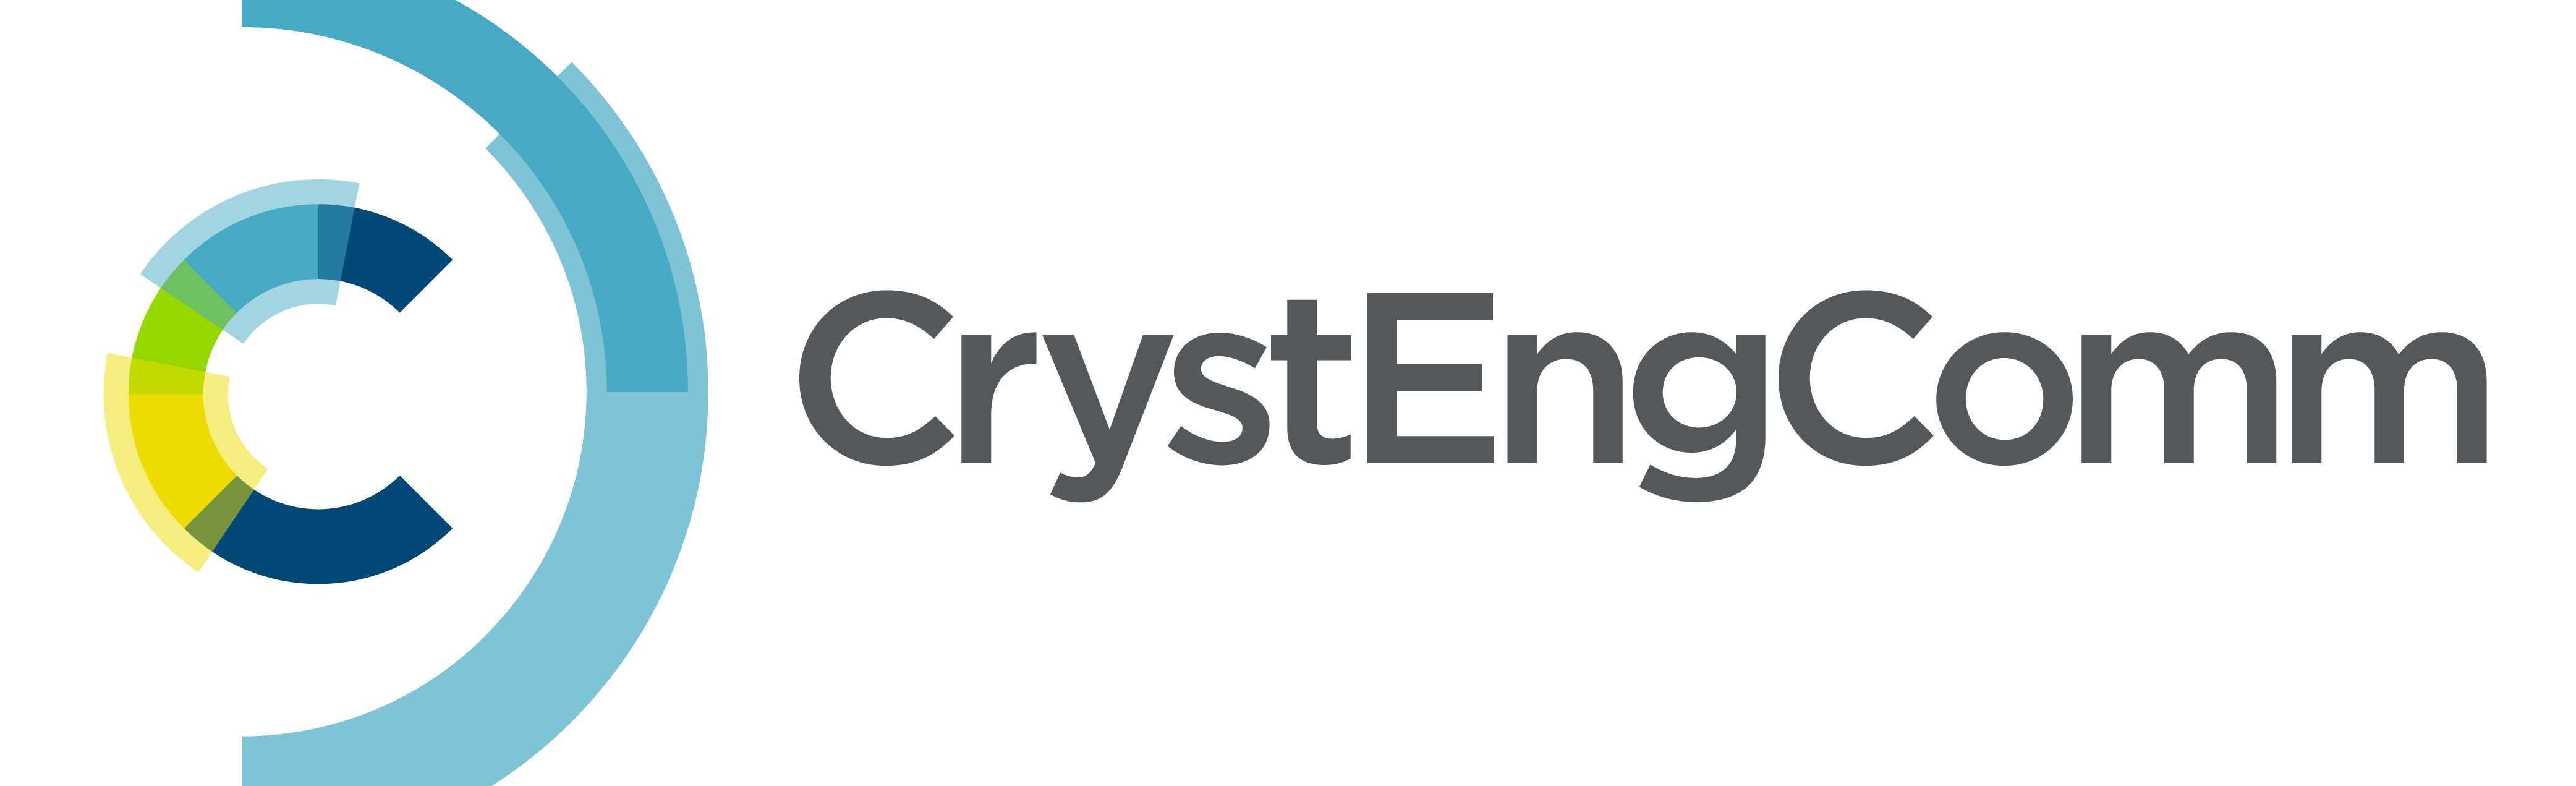 Crystal Engineering Comm Logo